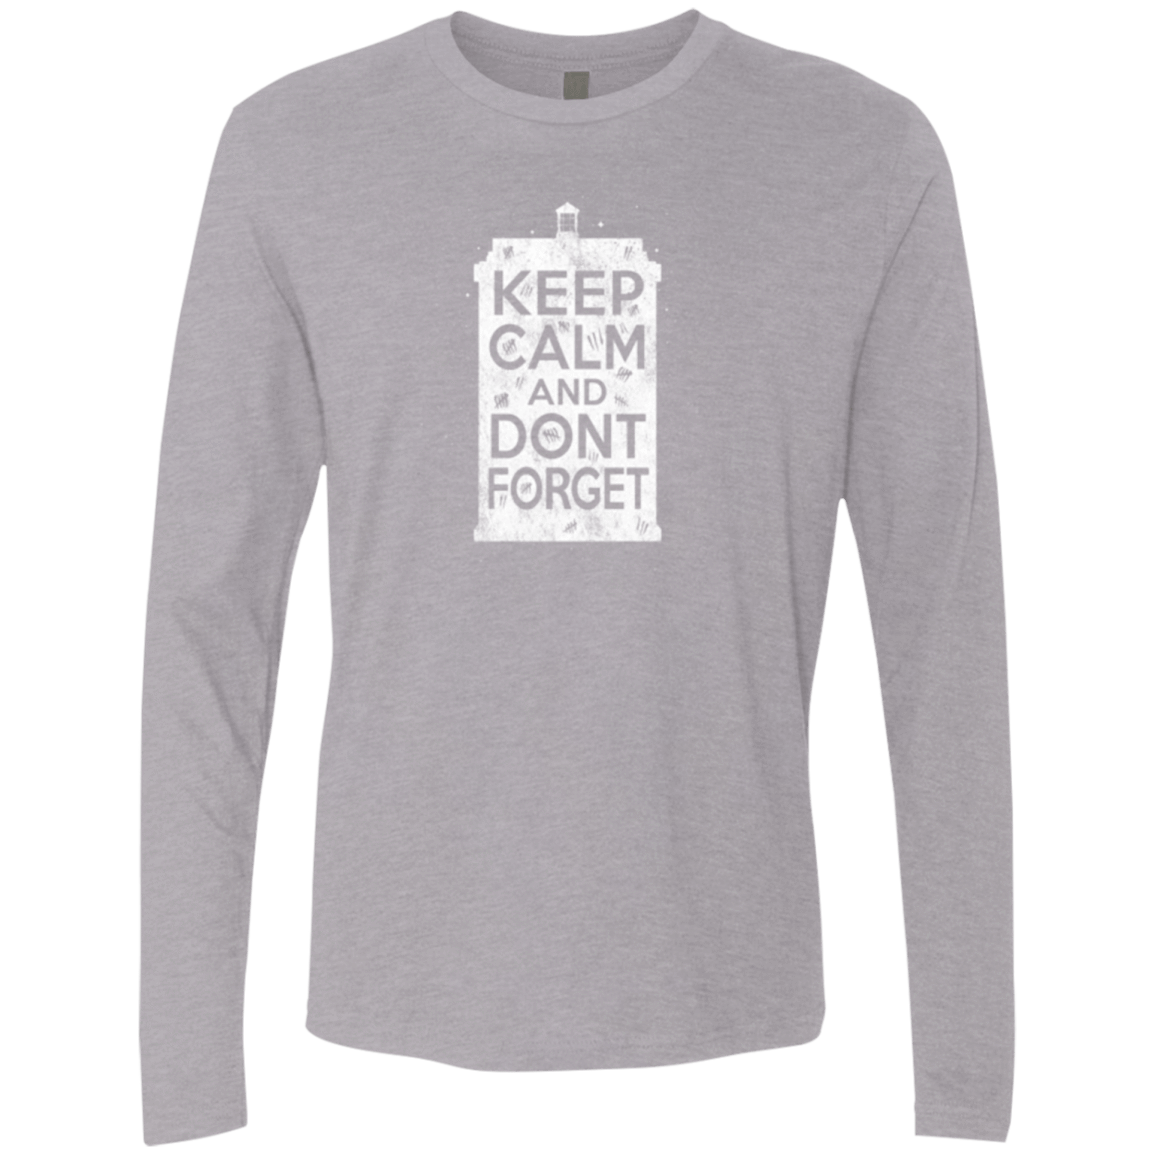 T-Shirts Heather Grey / Small KCDF Tardis Men's Premium Long Sleeve